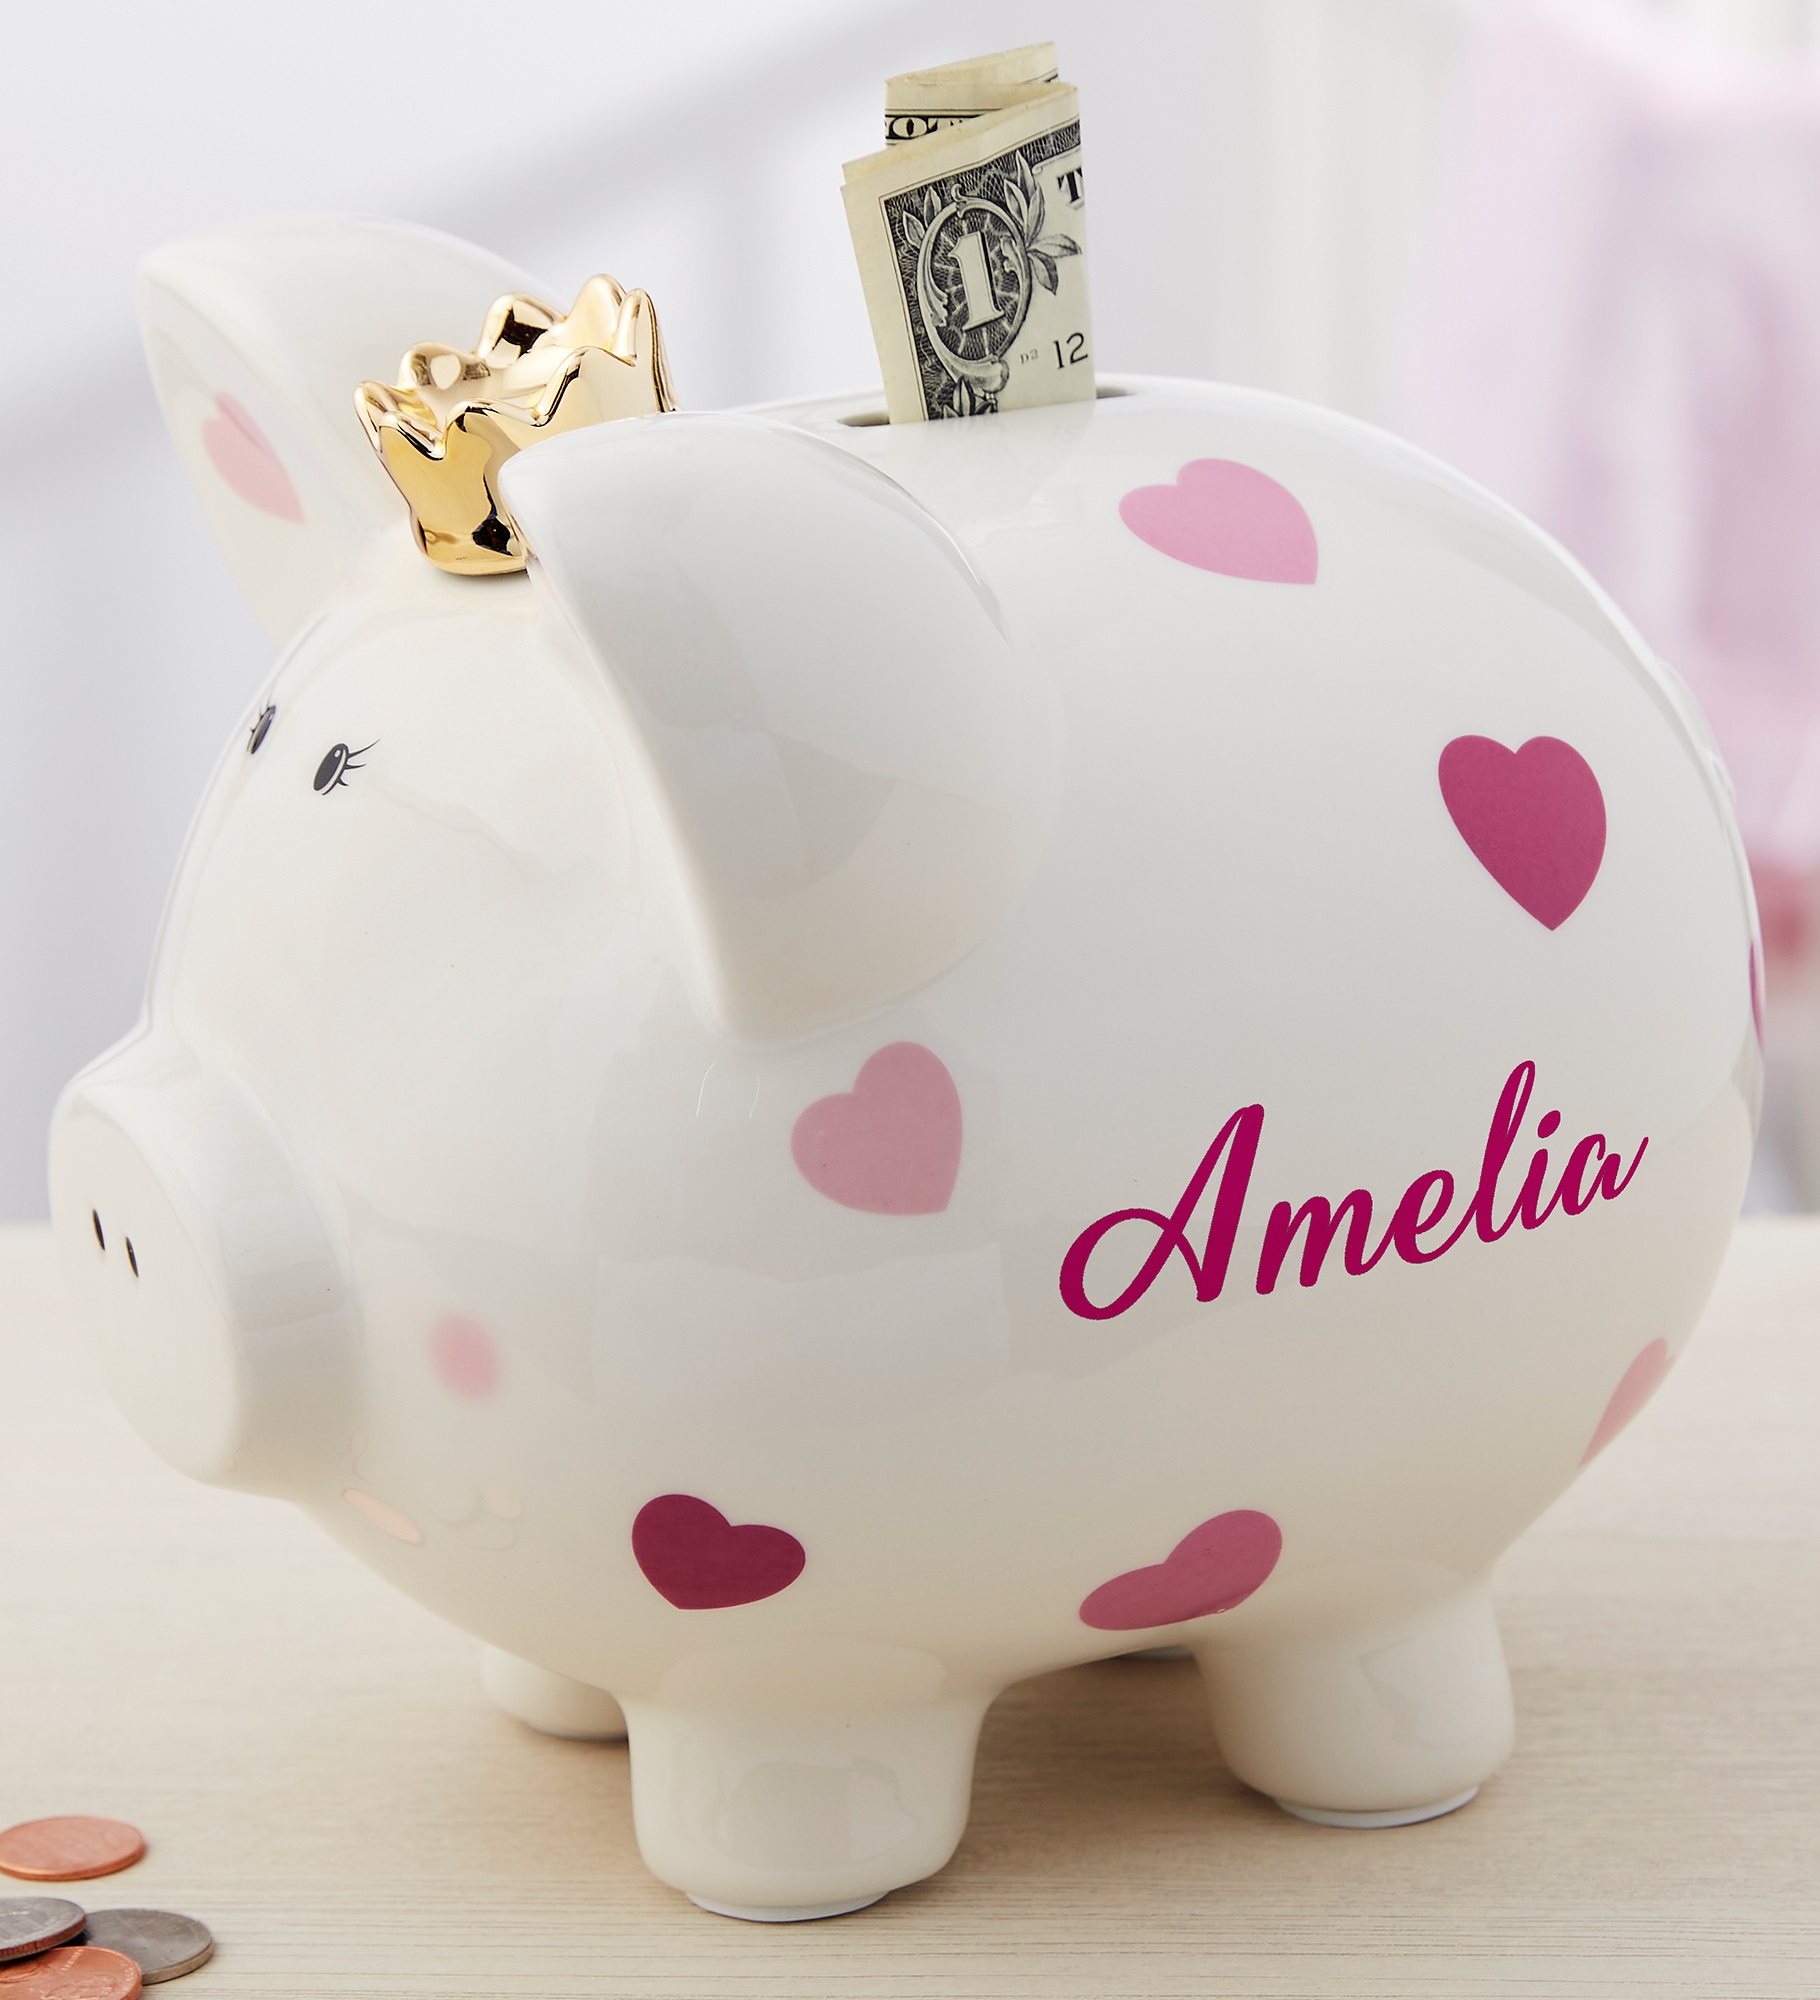 Baby Girl Pink Polka Dot Personalized Piggy Bank